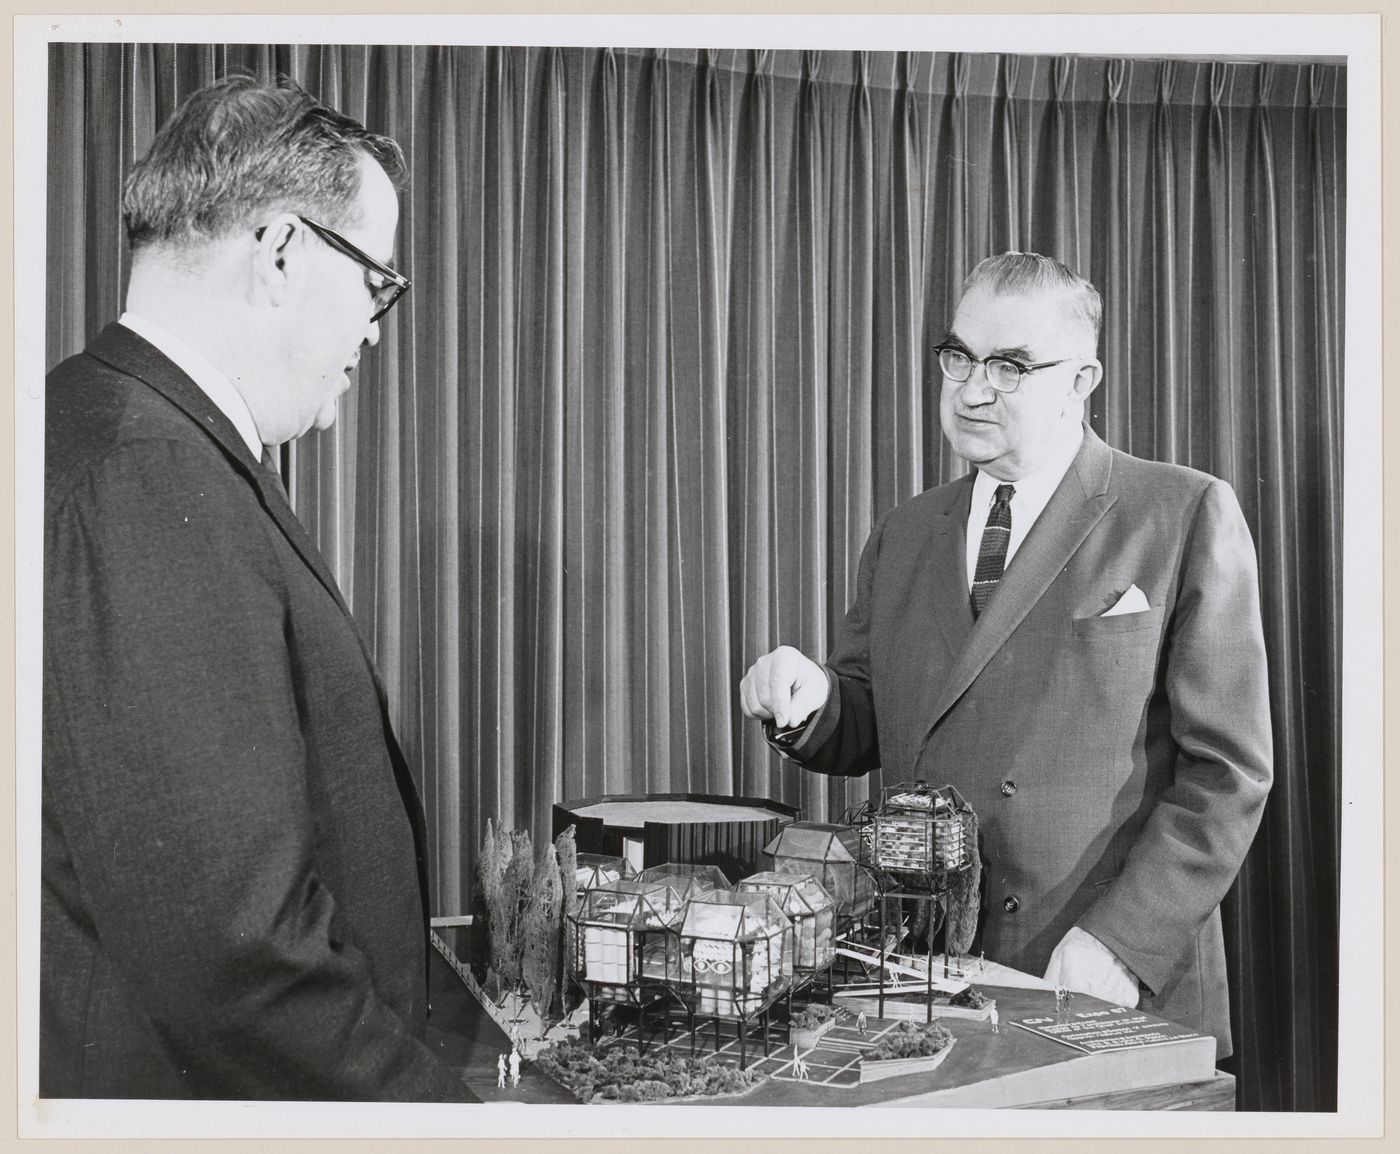 Donald Gordon and Robert F. Shaw with CN's Expo 67 pavillion model